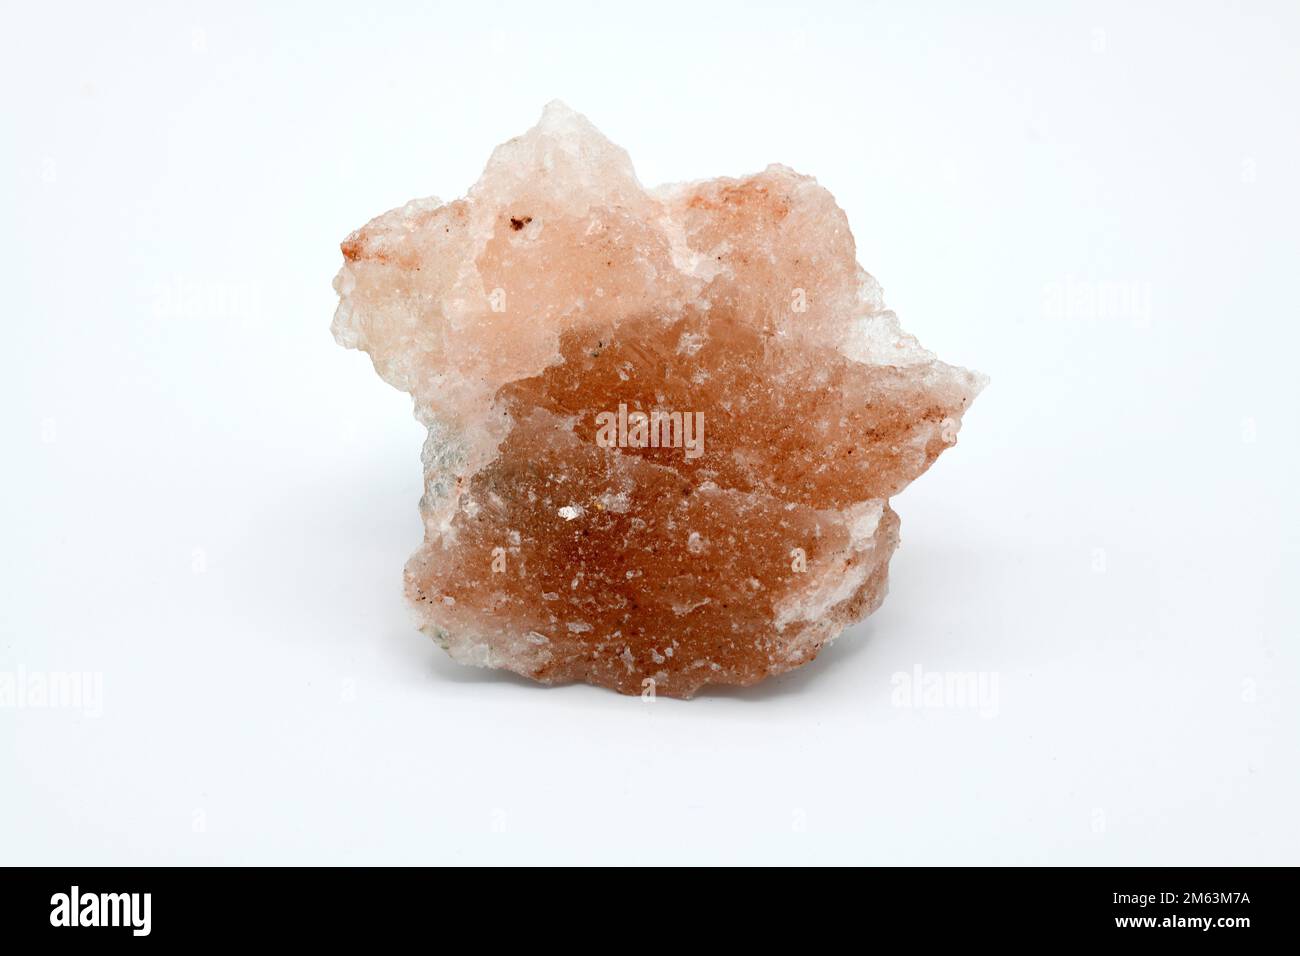 Piedra de sal de roca de halita cruda aislada